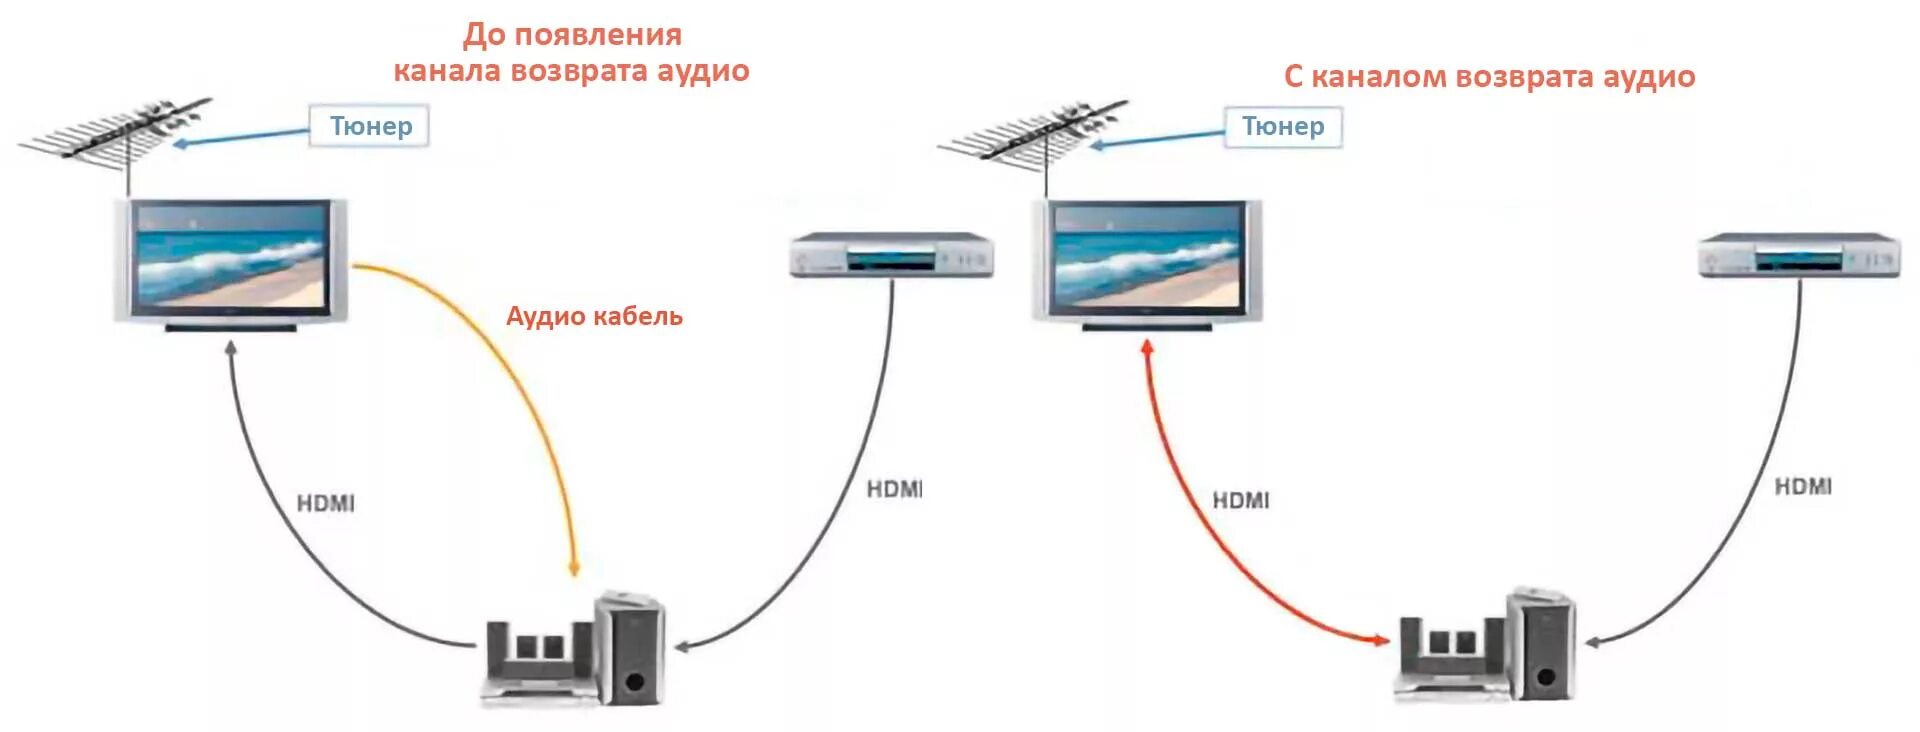 HDMI кабель для саундбара LG. Саундбар Samsung схема подключения HDMI. Схема подключения EARC HDMI. HDMI Arc EARC разница. Arc звук